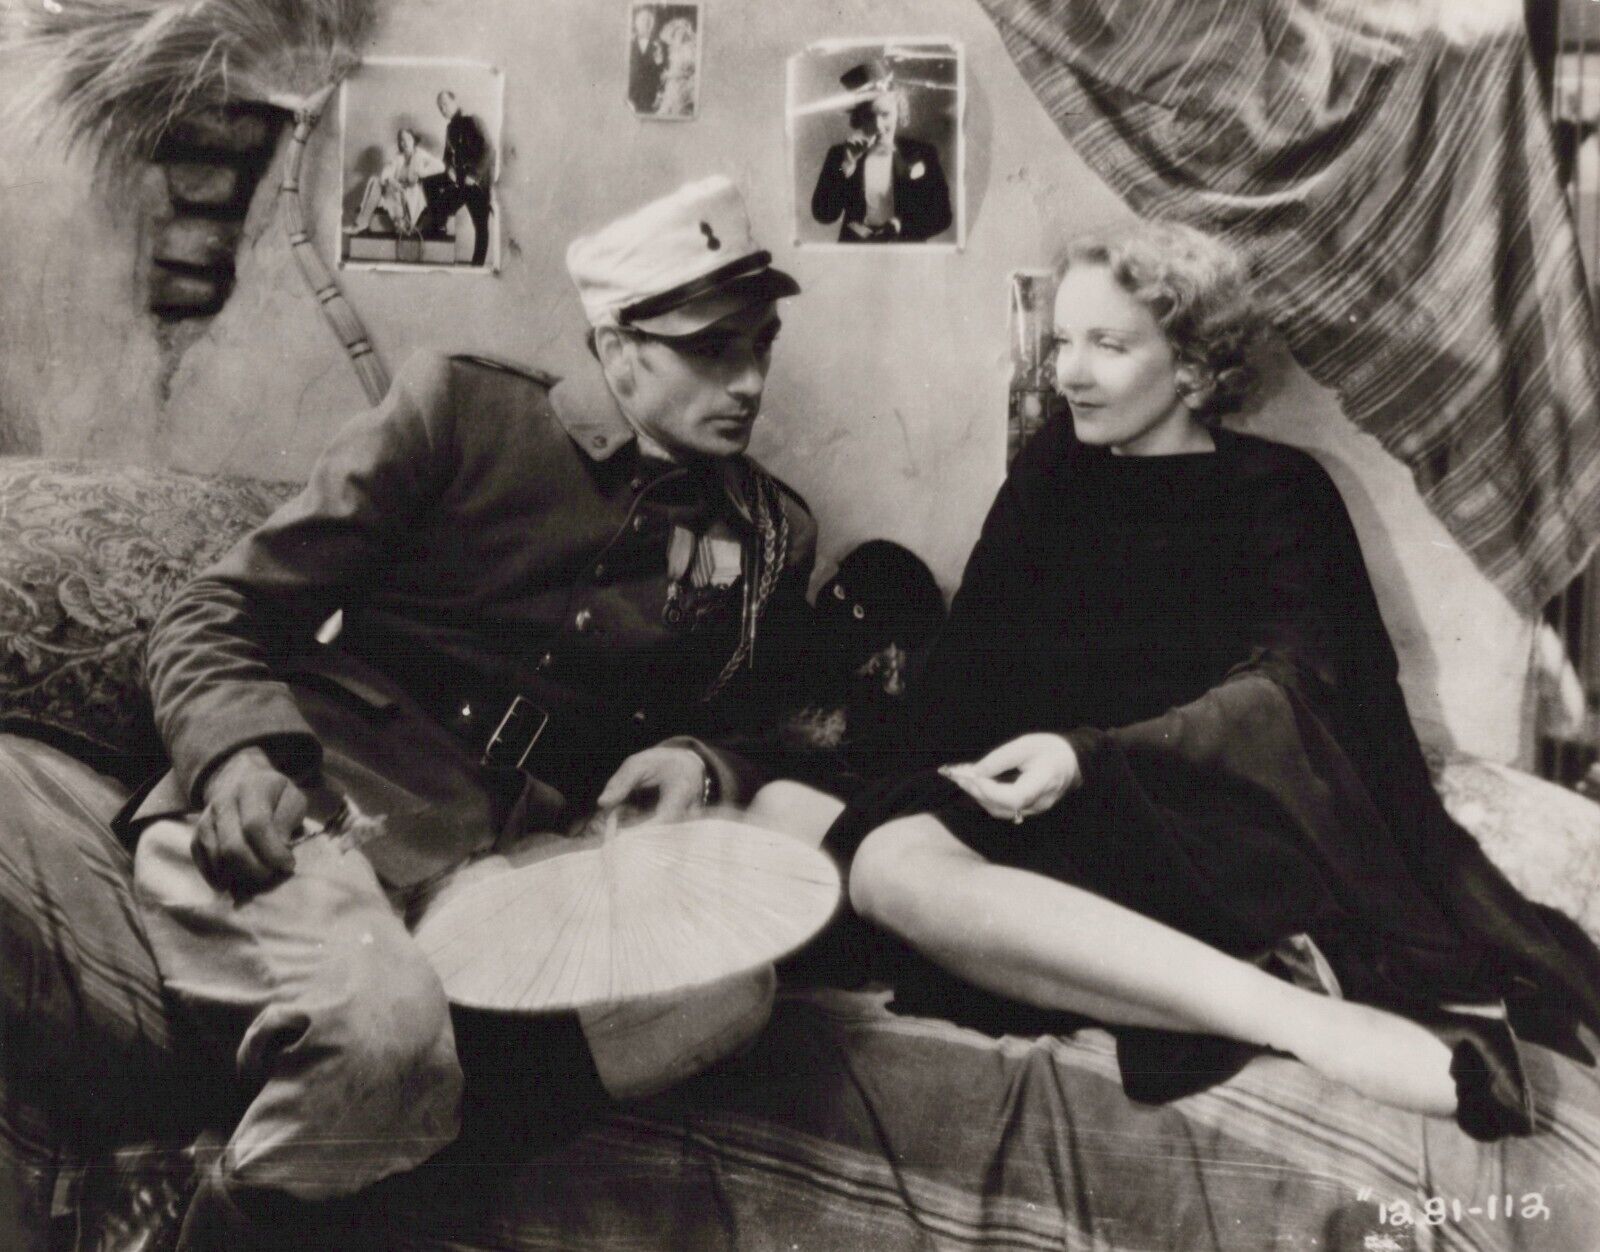 HOLLYWOOD BEAUTY MARLENE DIETRICH + GARY COOPER PORTRAIT 1950s VINTAGE Photo C37